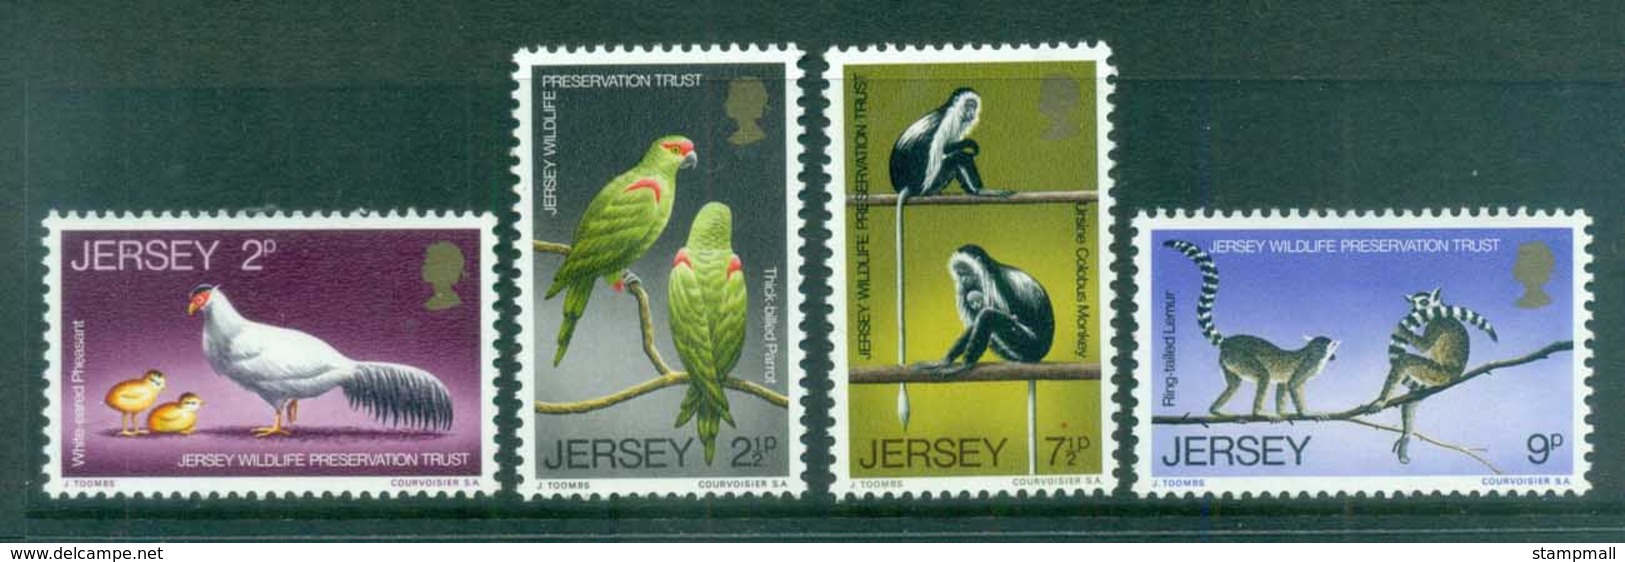 Jersey 1971 Jersey Wildlife Preservation Trust MUH - Jersey